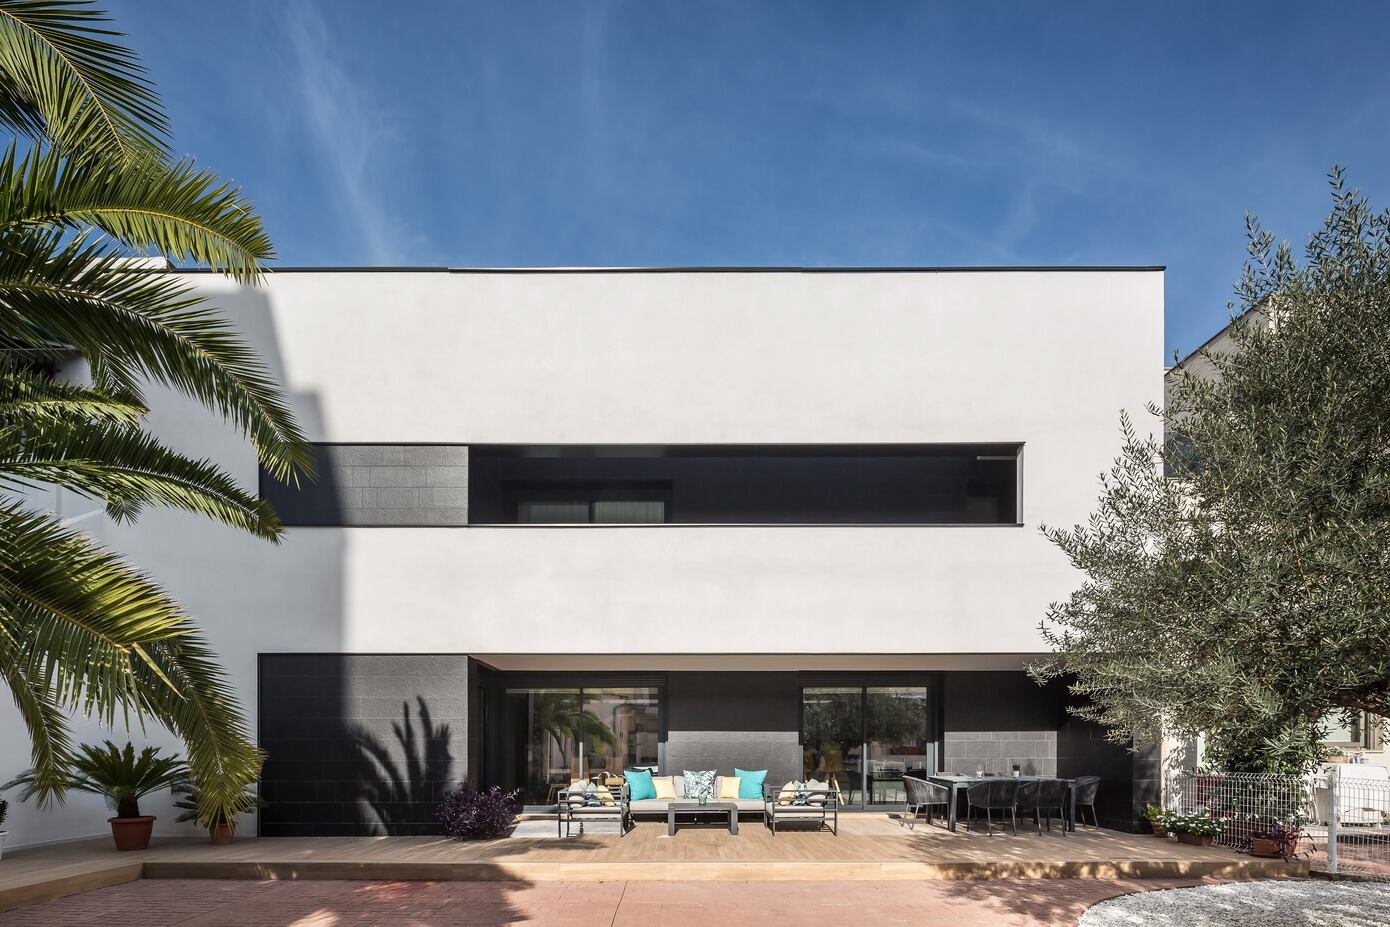 J&G House: A Sun-Kissed, Modern Architectural Marvel